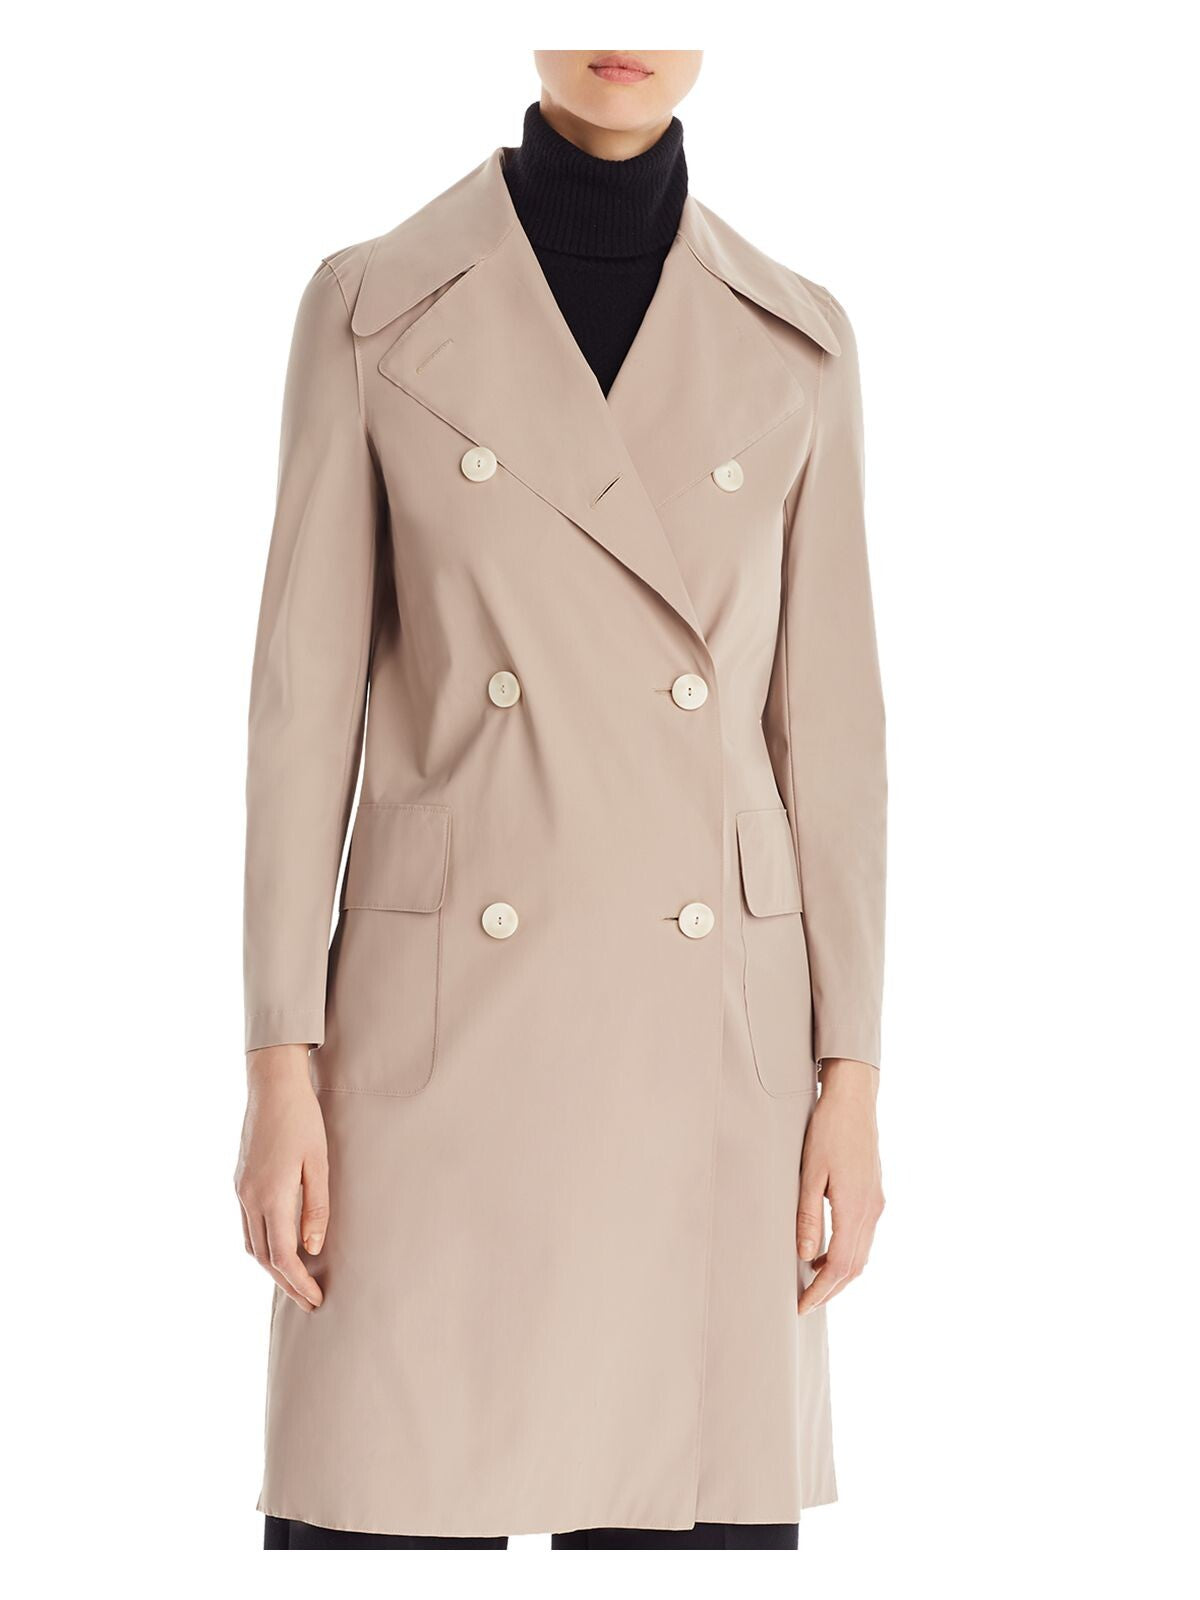 HARRIS WHARF LONDON Womens Beige Trench Coat Size: 44